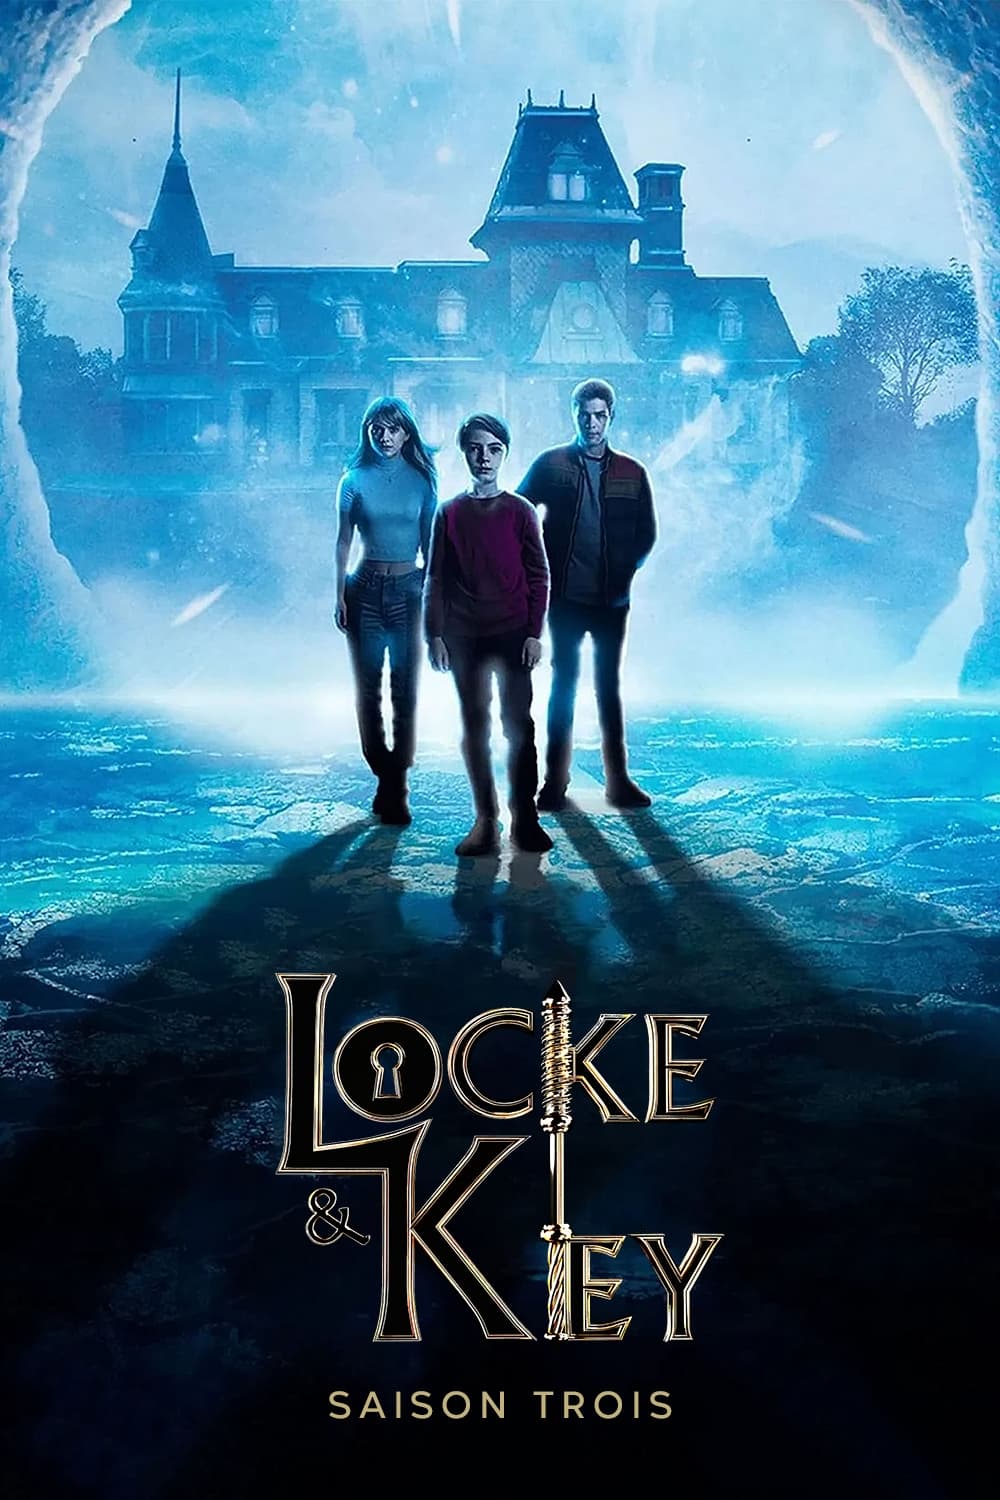 Locke & Key ล็อคแอนด์คีย์ ปริศนาลับตระกูลล็อค Season 3